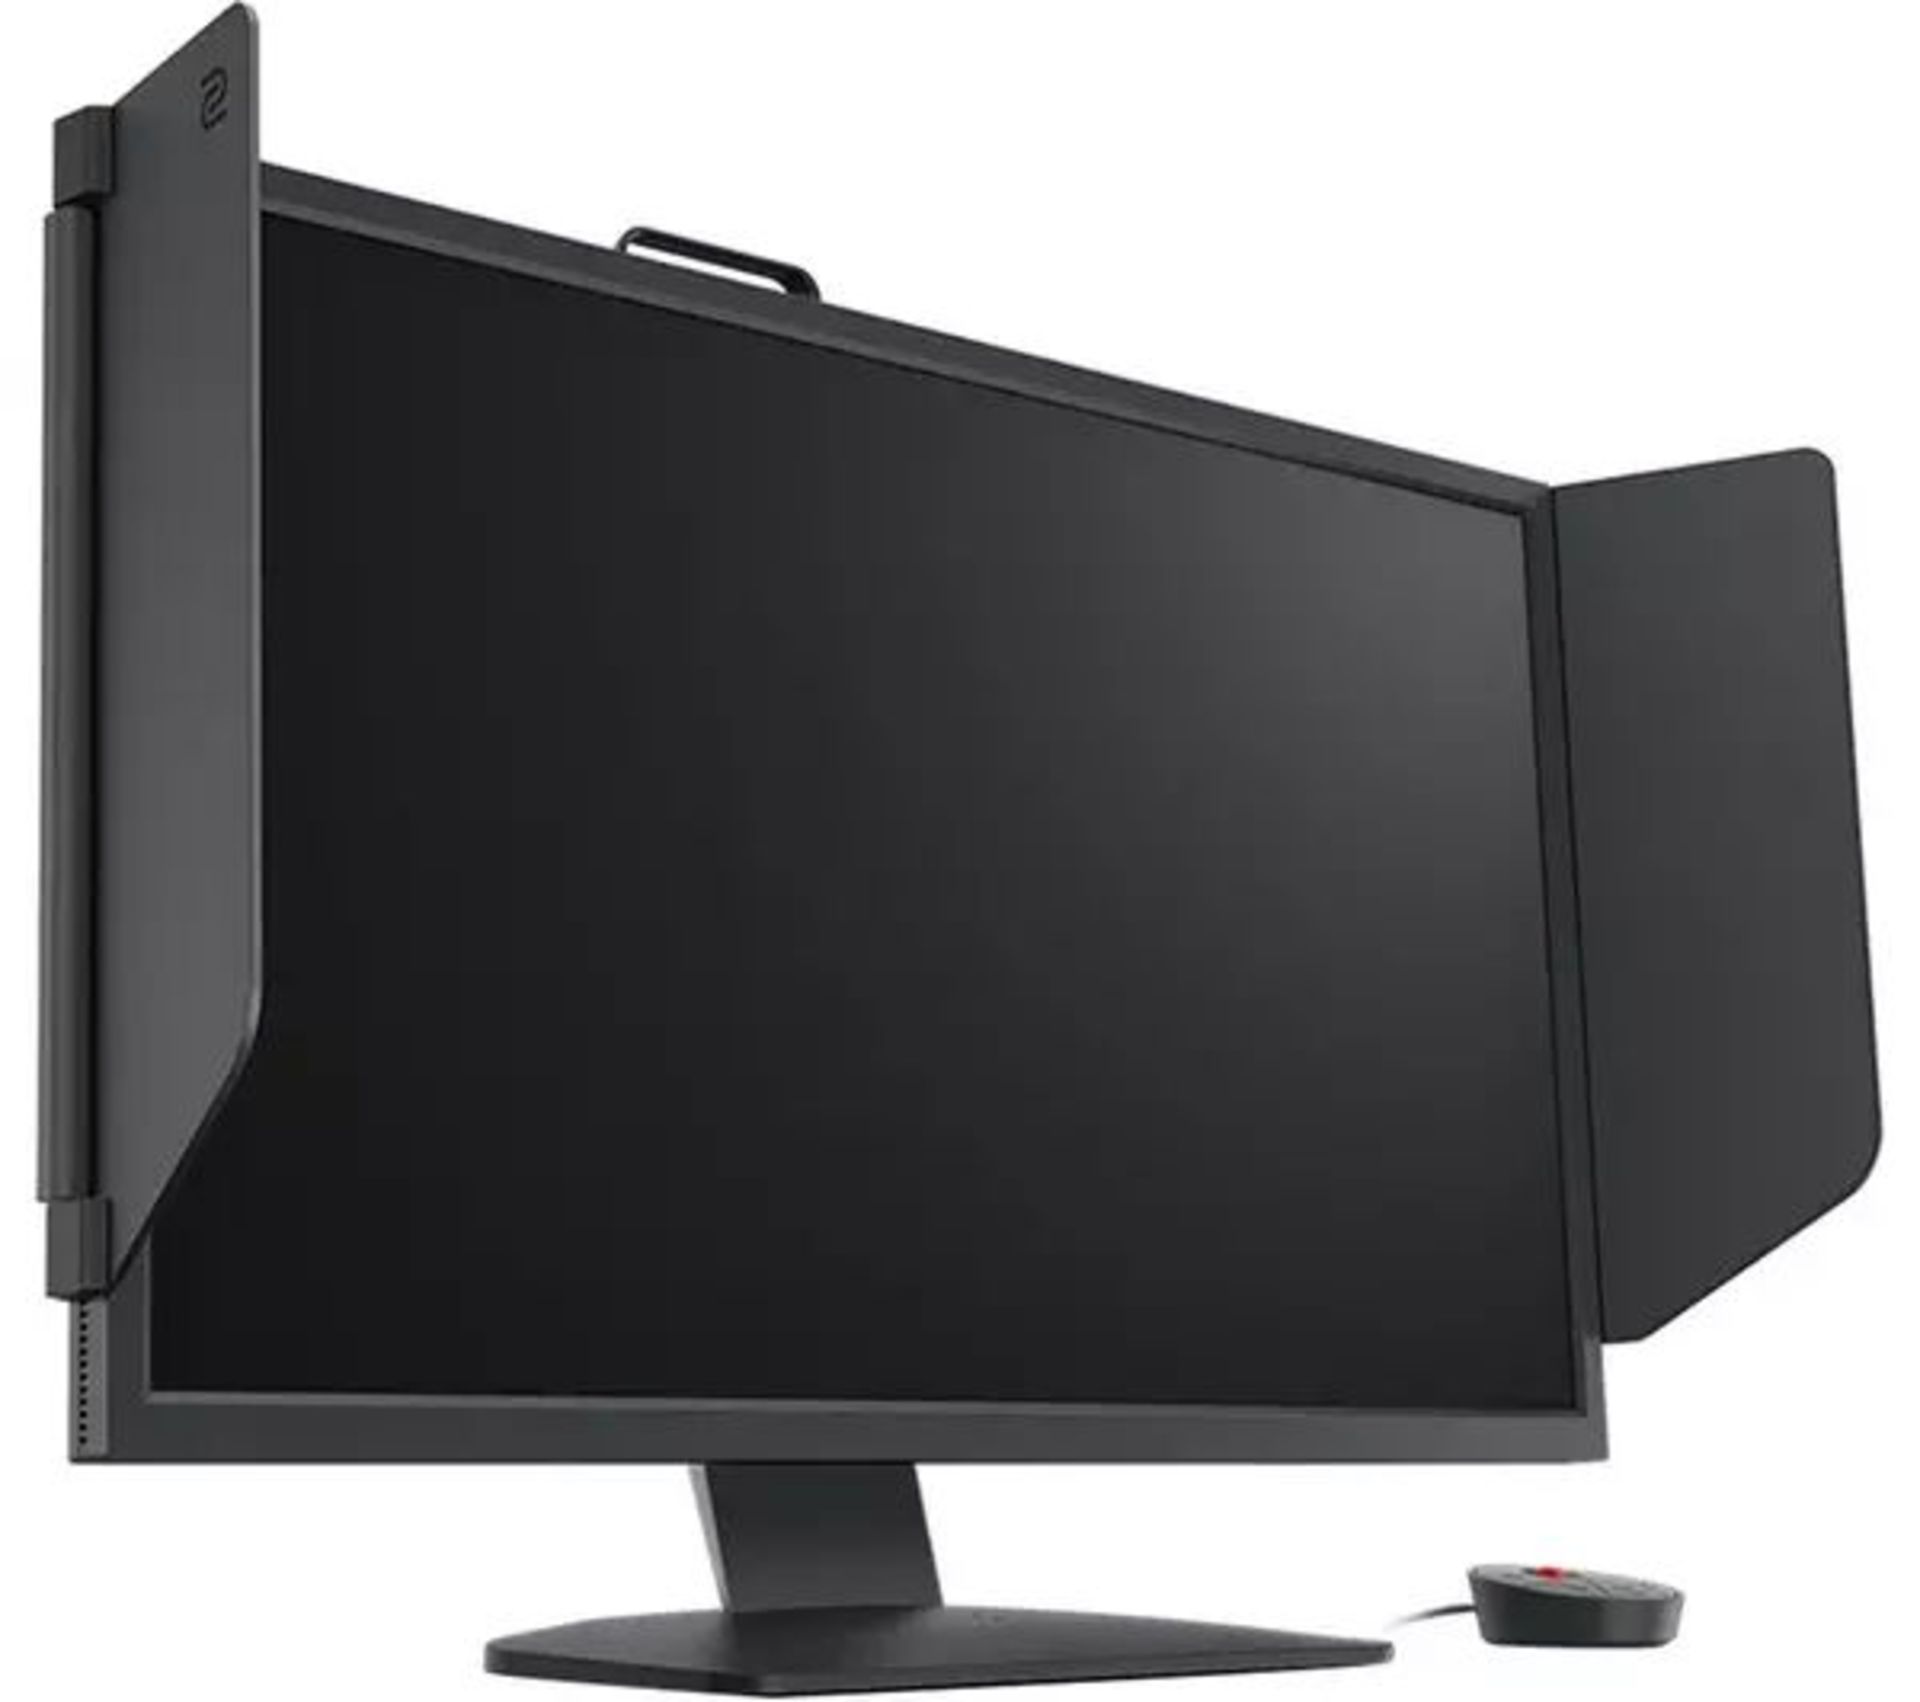 BENQ Zowie XL2566K Full HD 24.5" TN LCD Gaming Monitor - Black. - BW. RRP £899.00. Get esport - Image 2 of 3